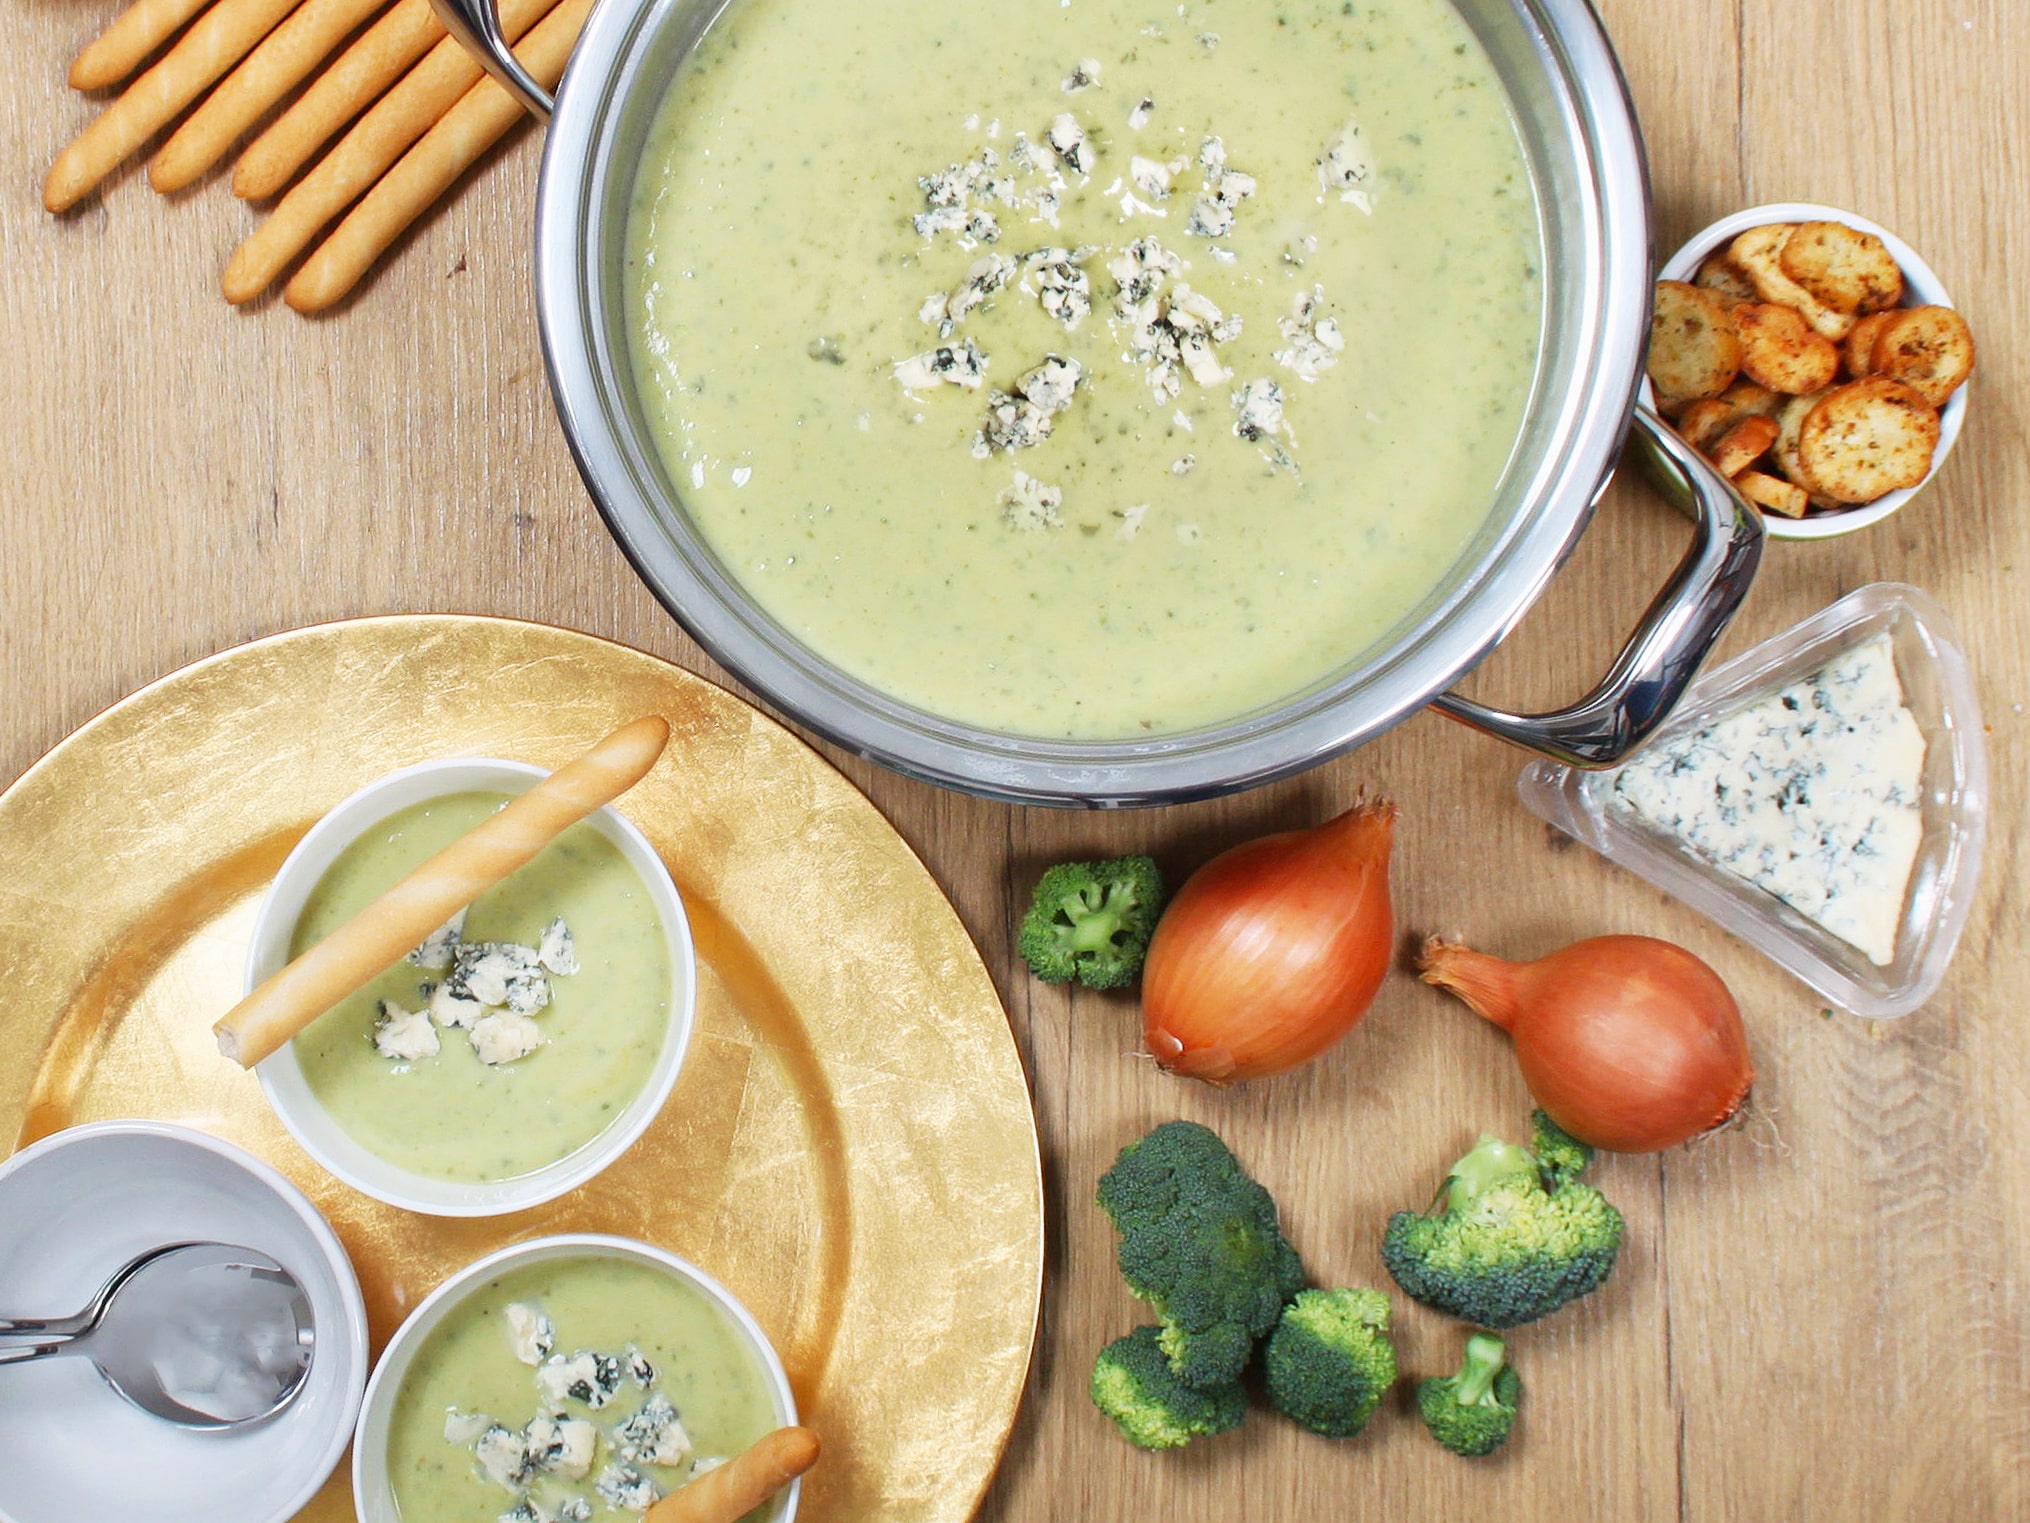 Broccoli & blue cheese soup